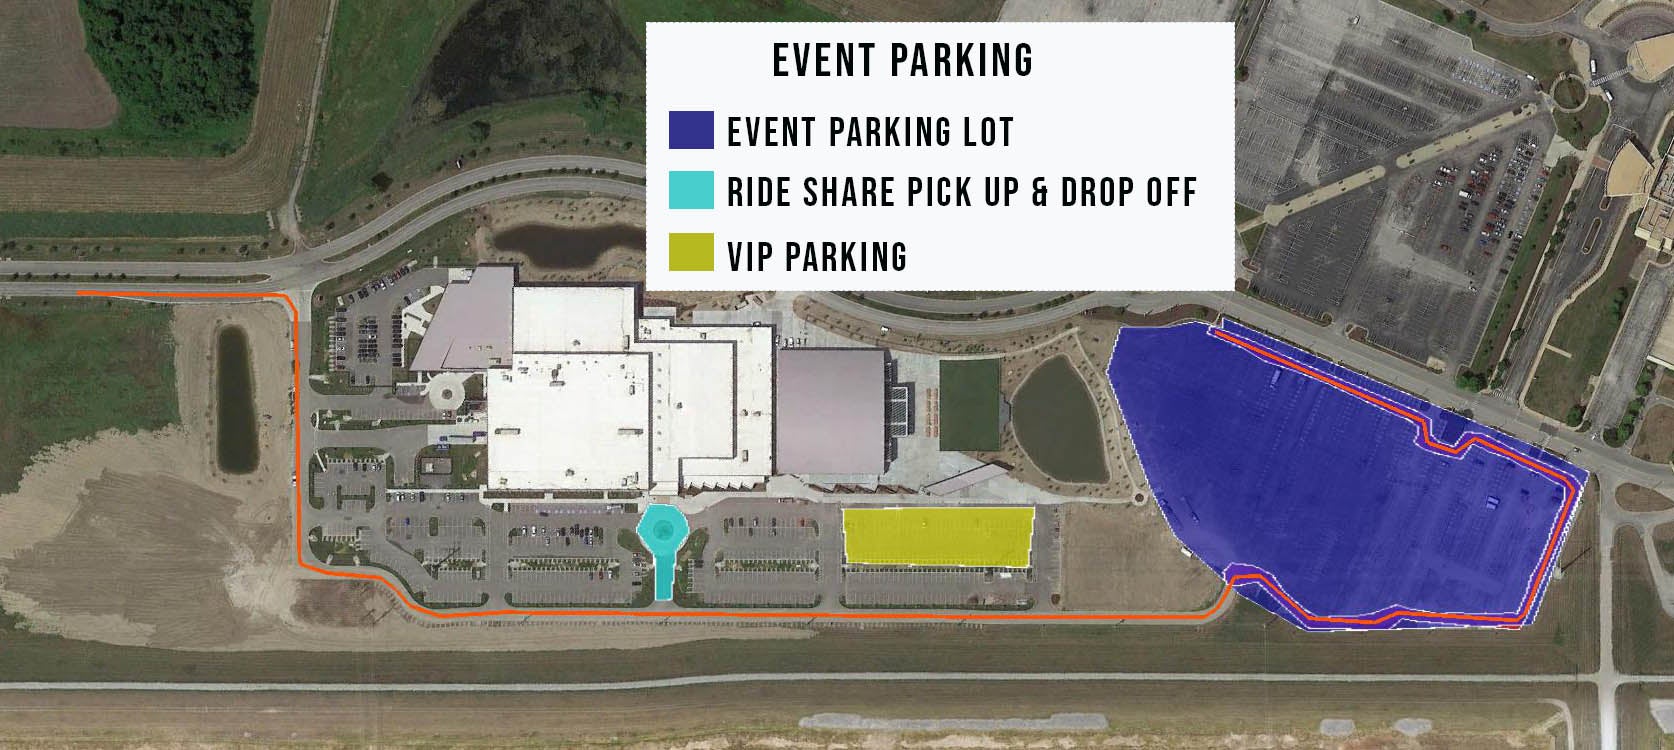 Concert Parking Map 4.0 copy.jpg